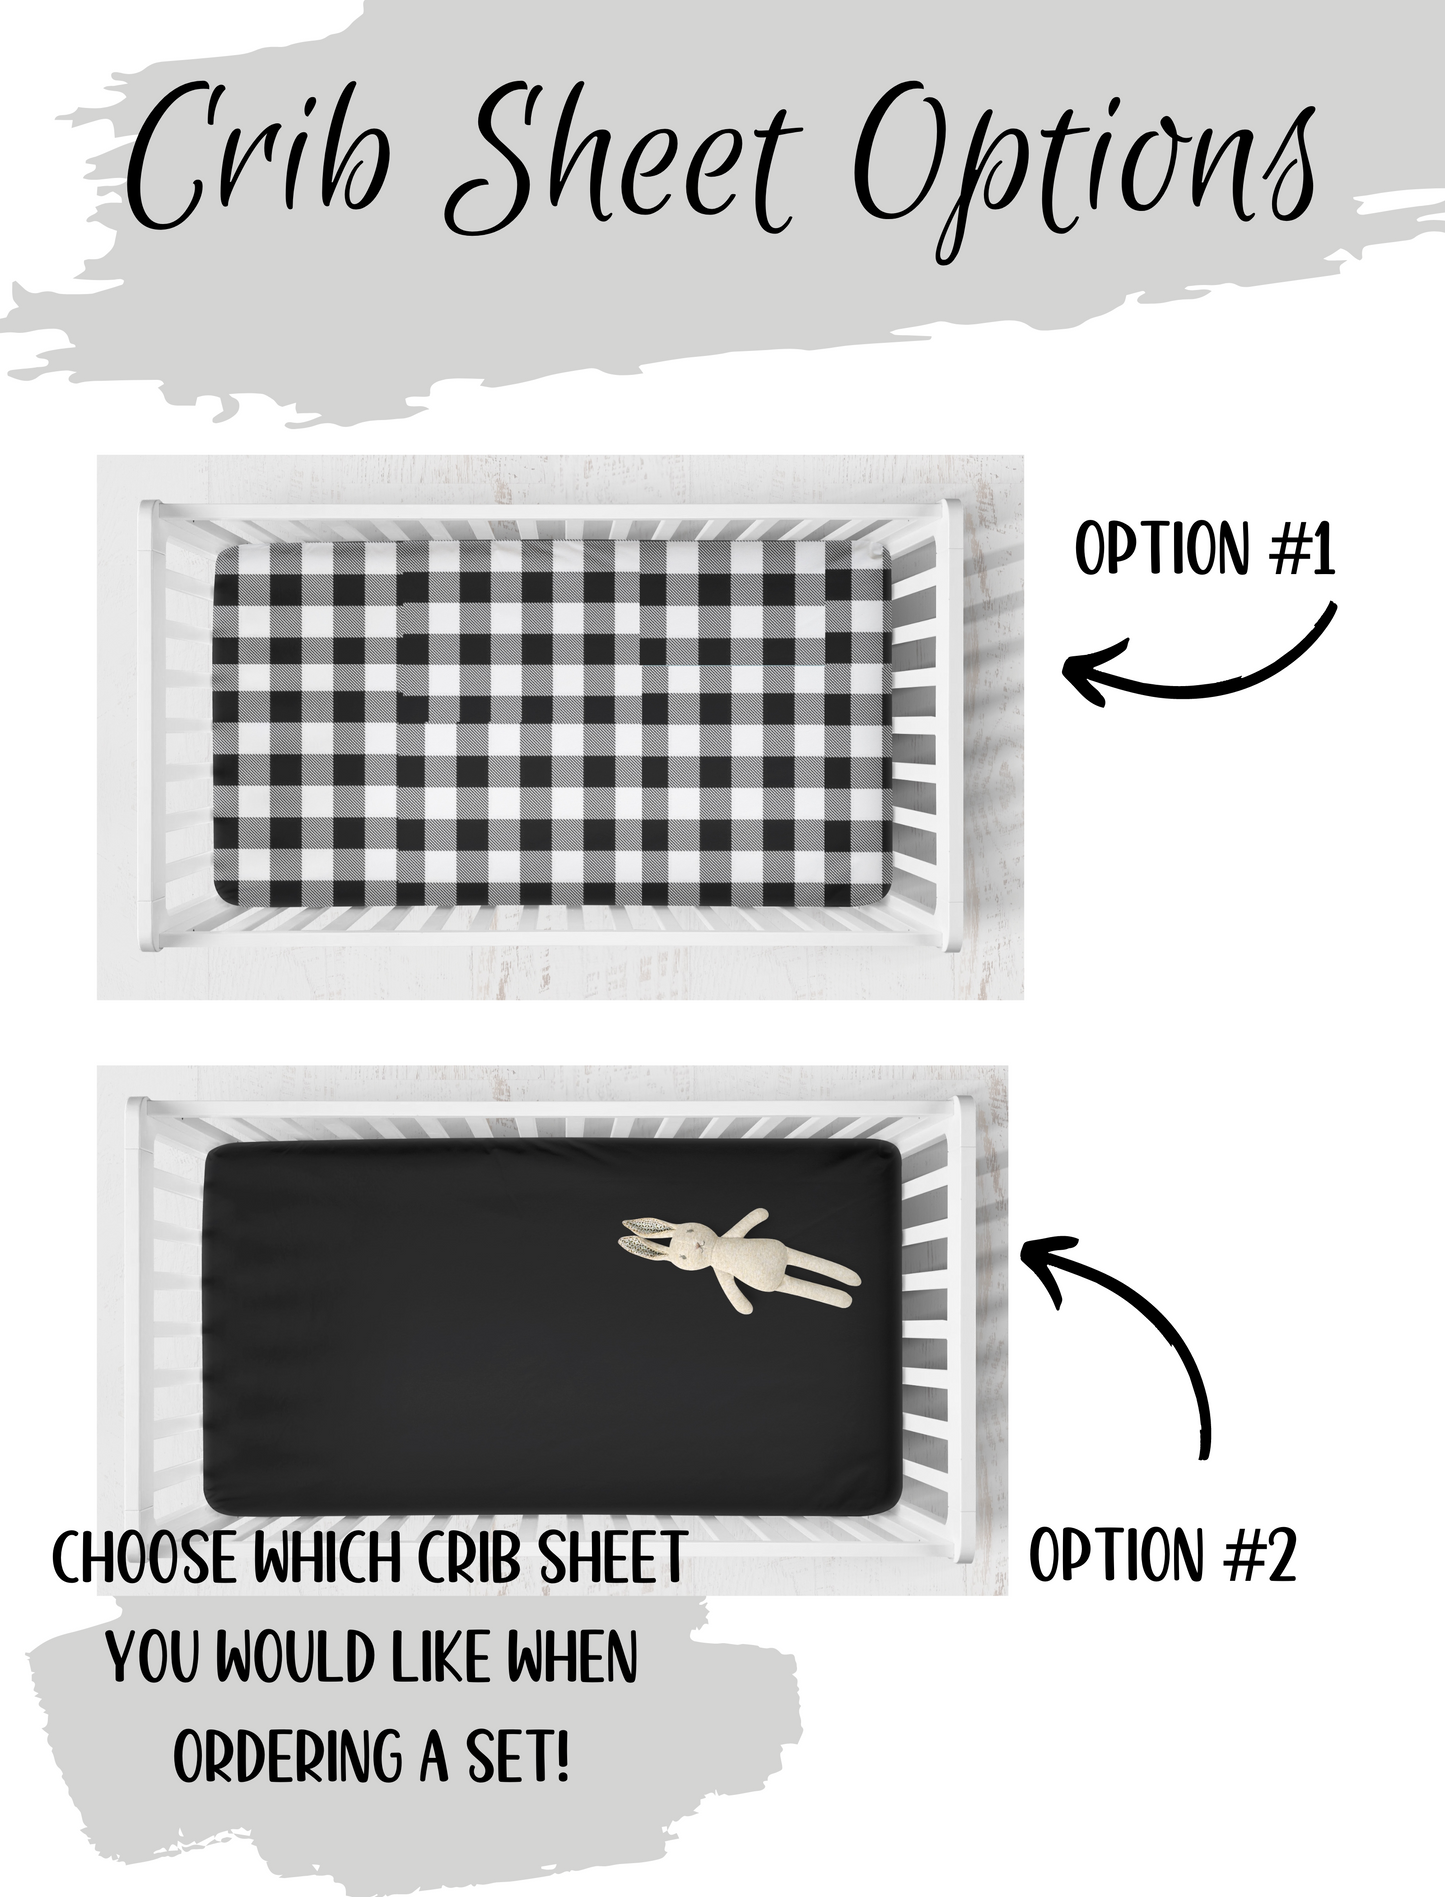 pick your crib sheet -  black gingham crib sheet or black crib sheet.